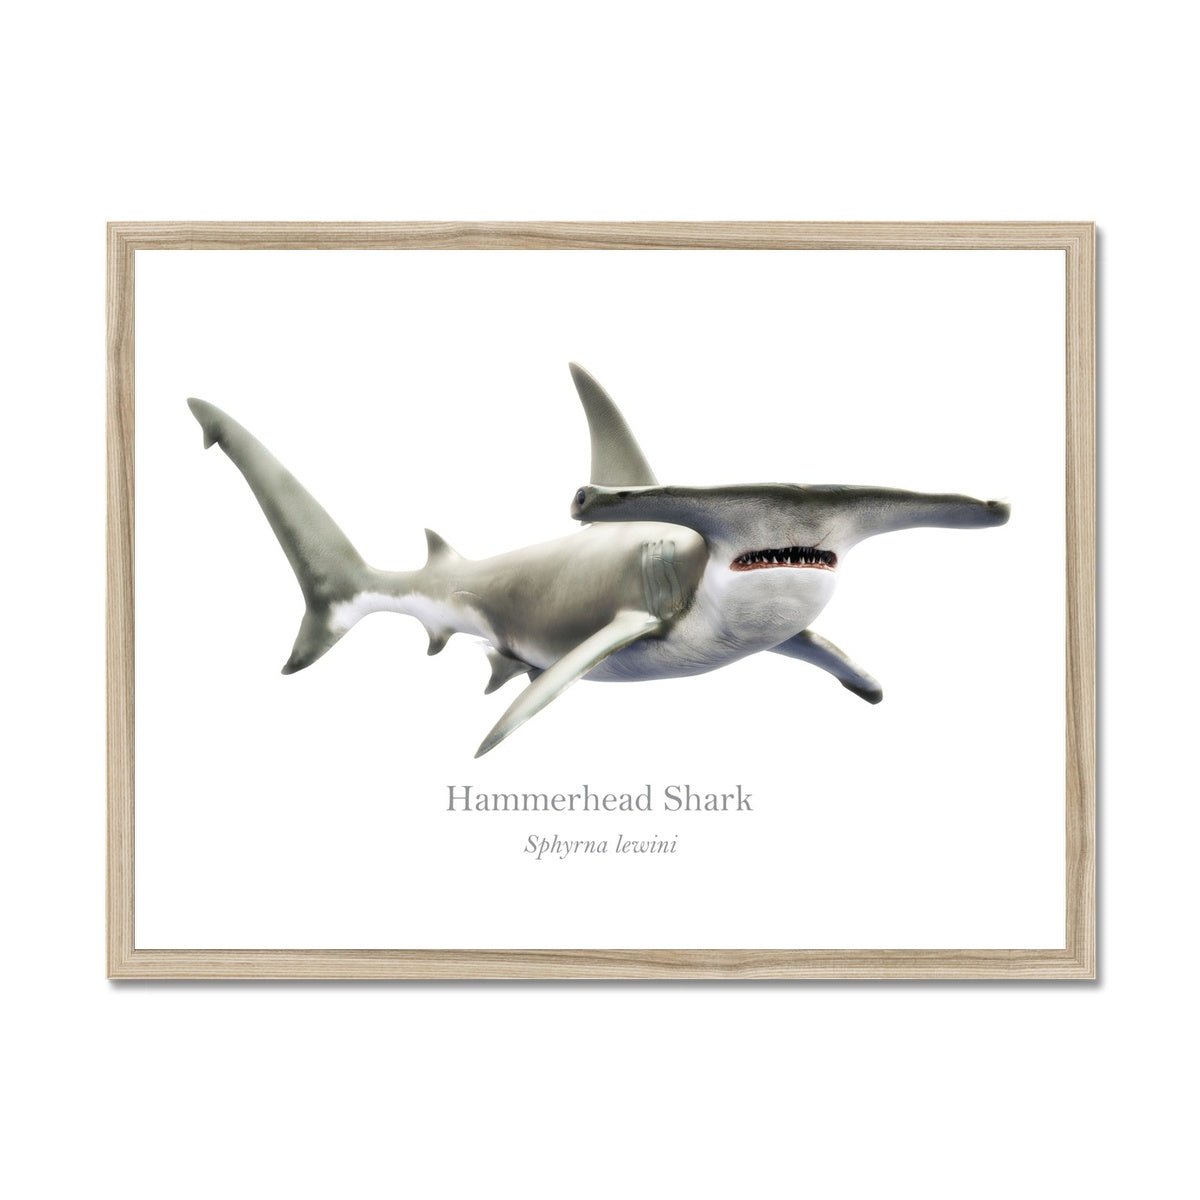 Hammerhead Shark - Framed Print - With Scientific Name - madfishlab.com